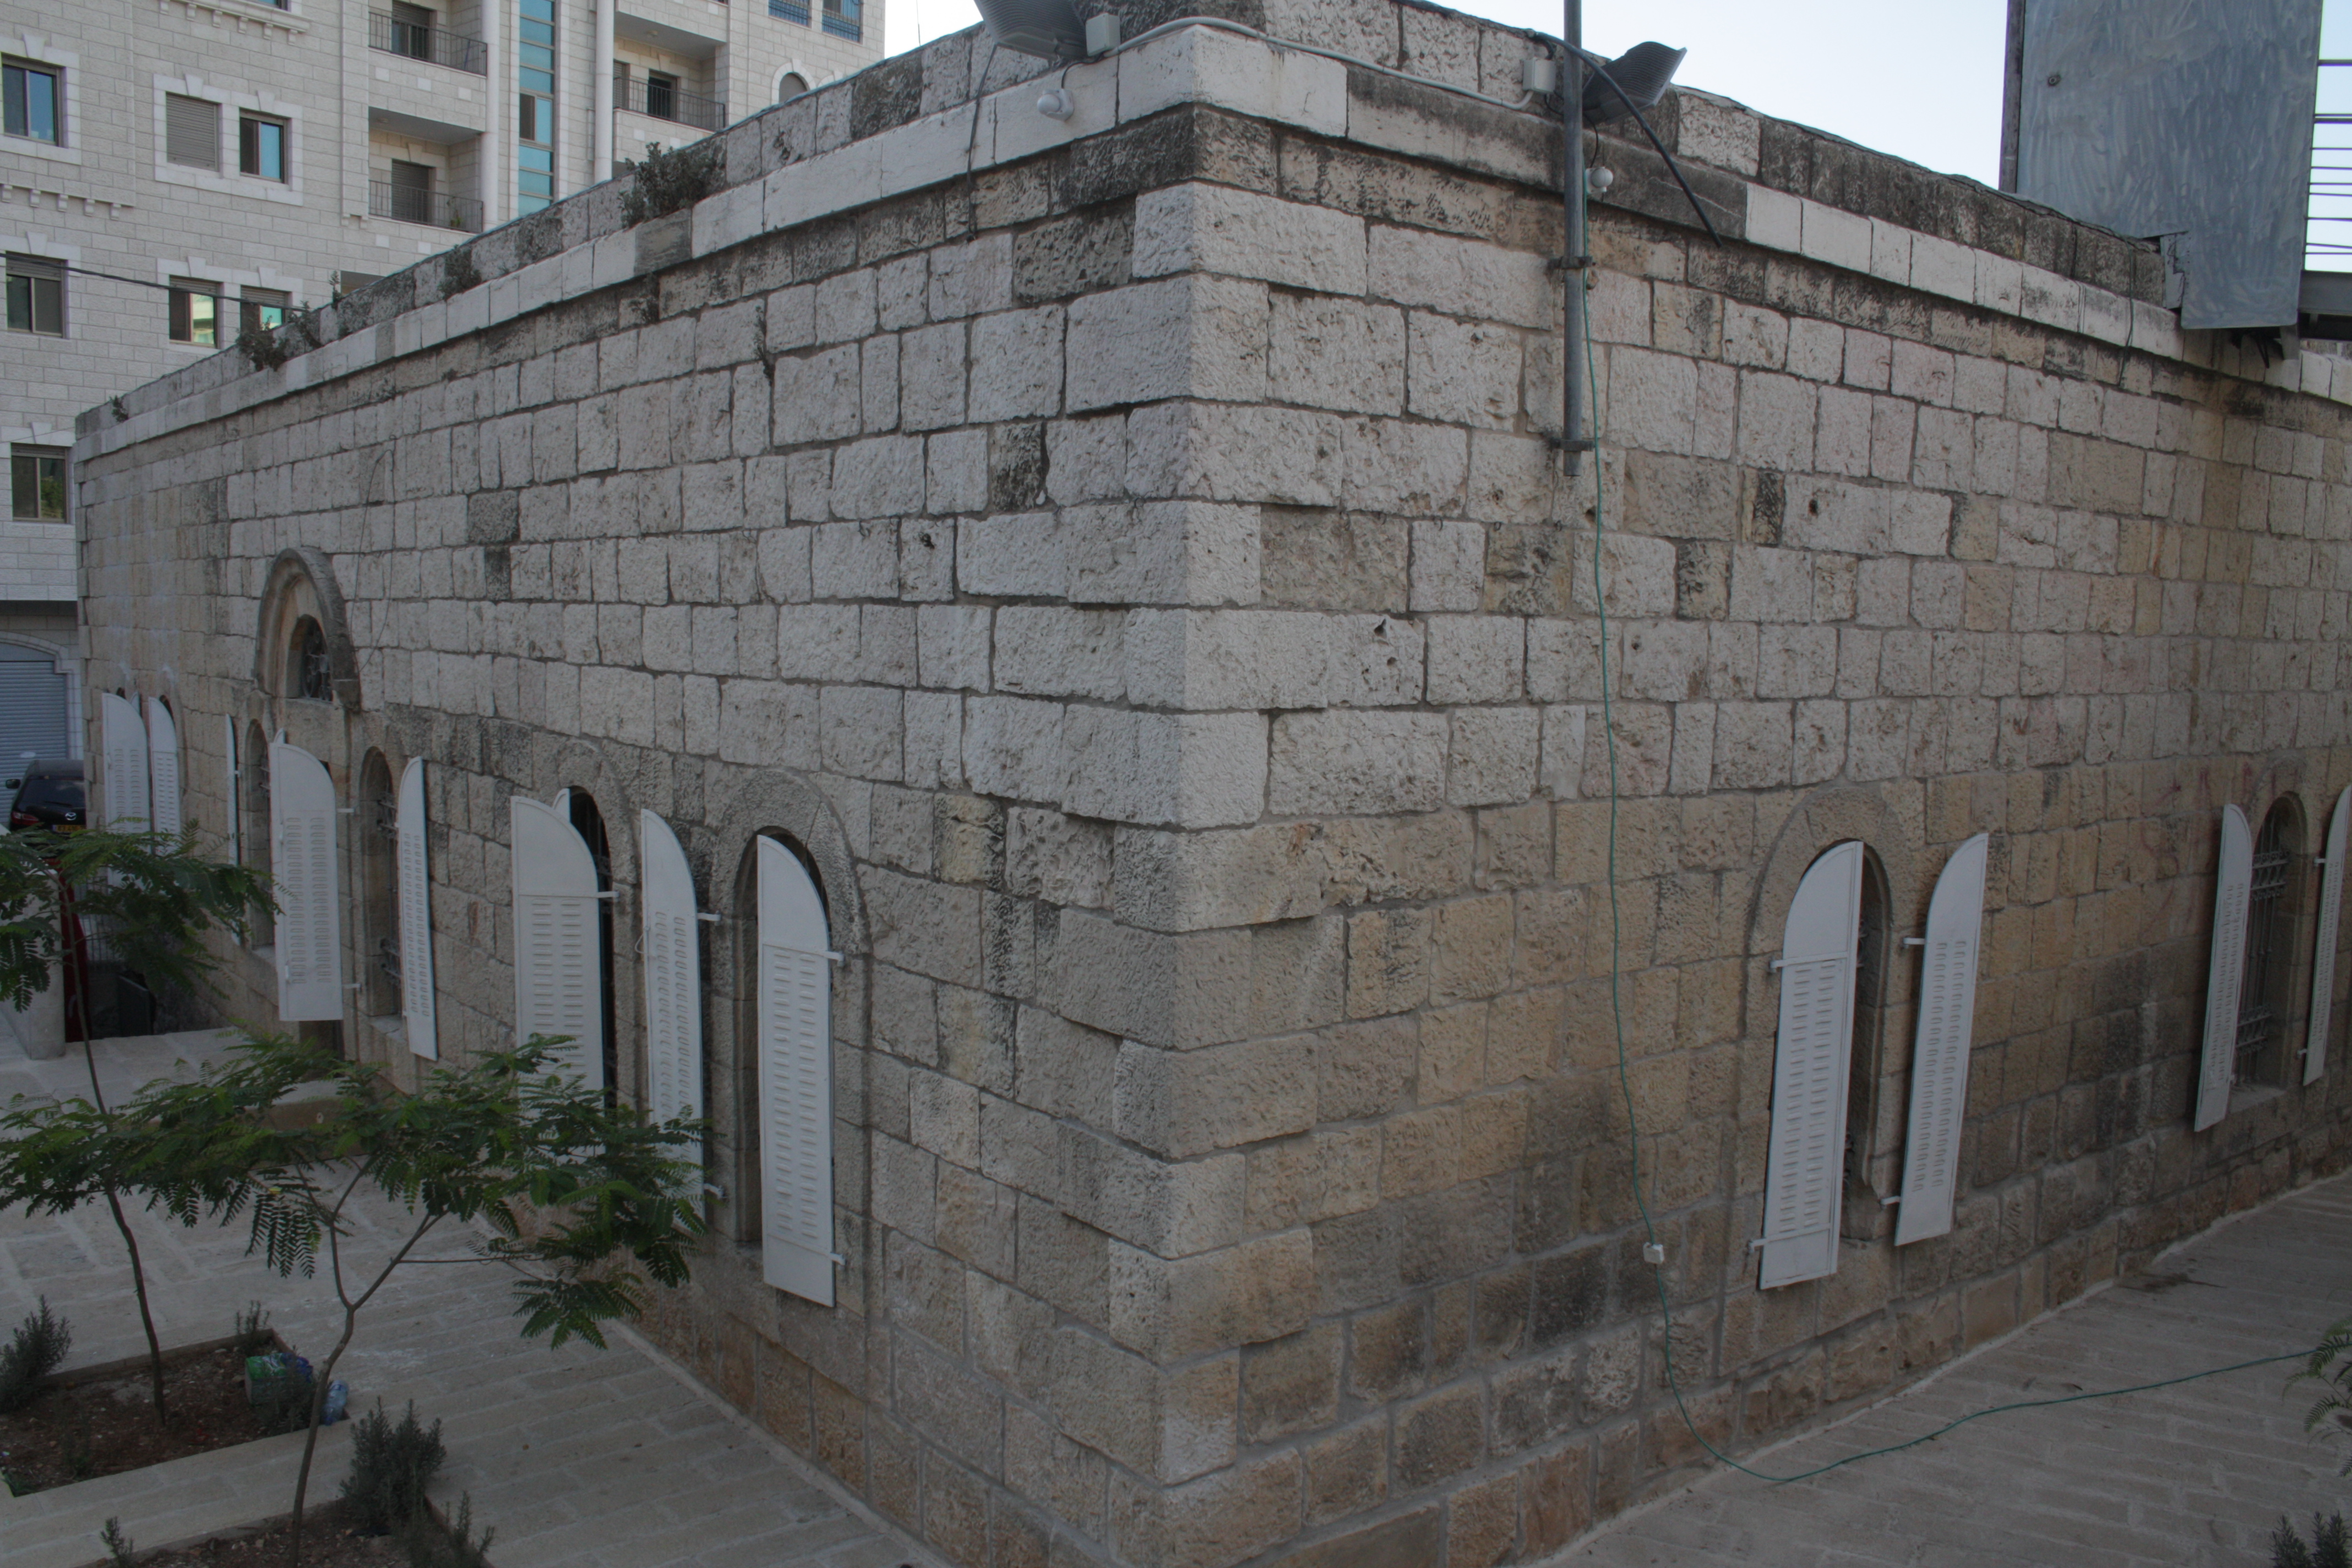 Beit Saa, recently renovated by Riwaq (photo: Ylenia Gostoli)